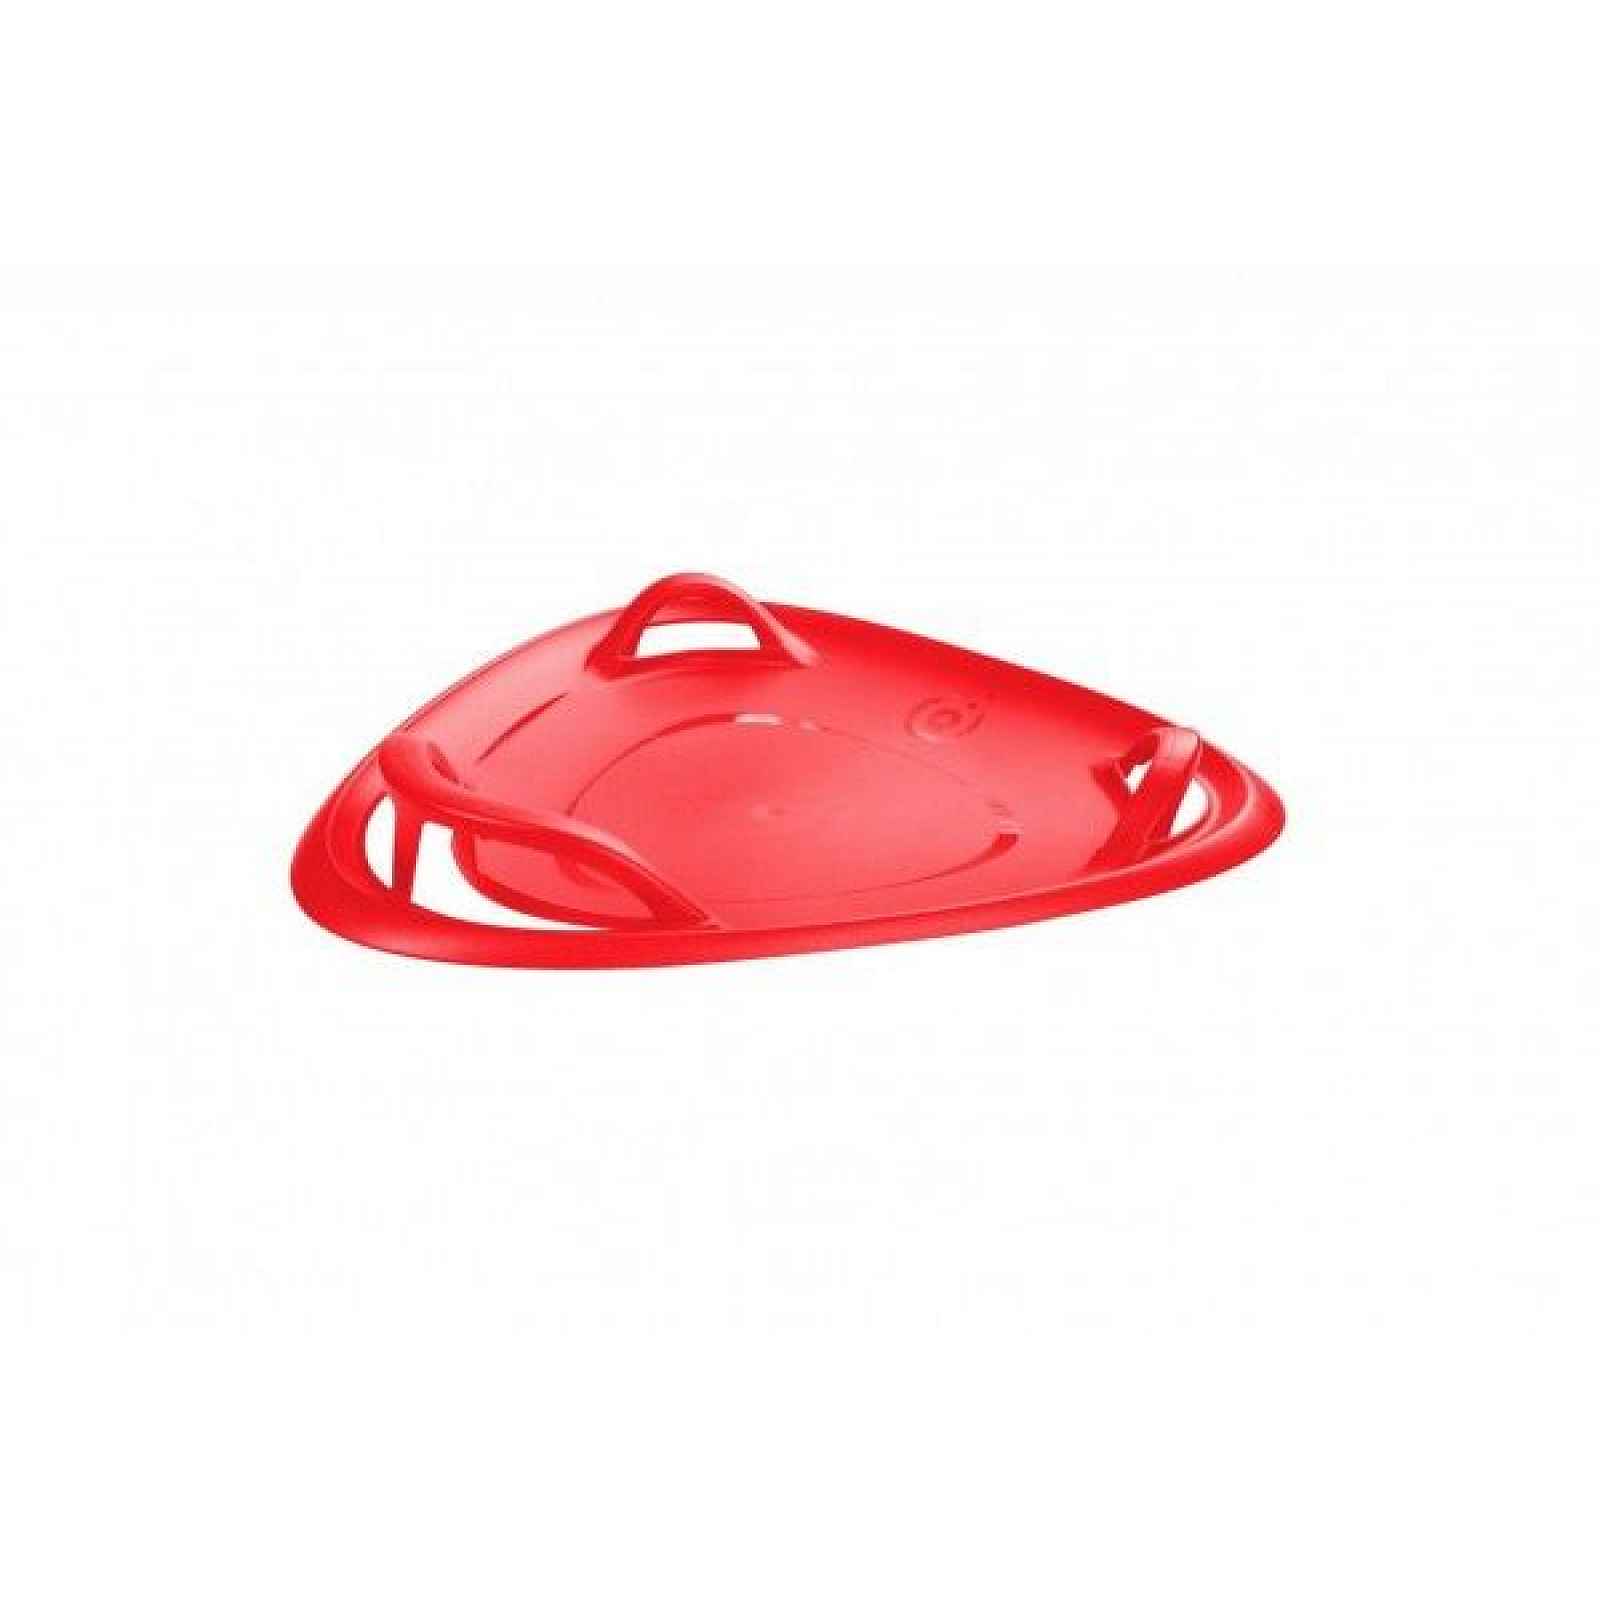 Červený sáňkovací talíř Gizmo Meteor, ⌀ 60 cm